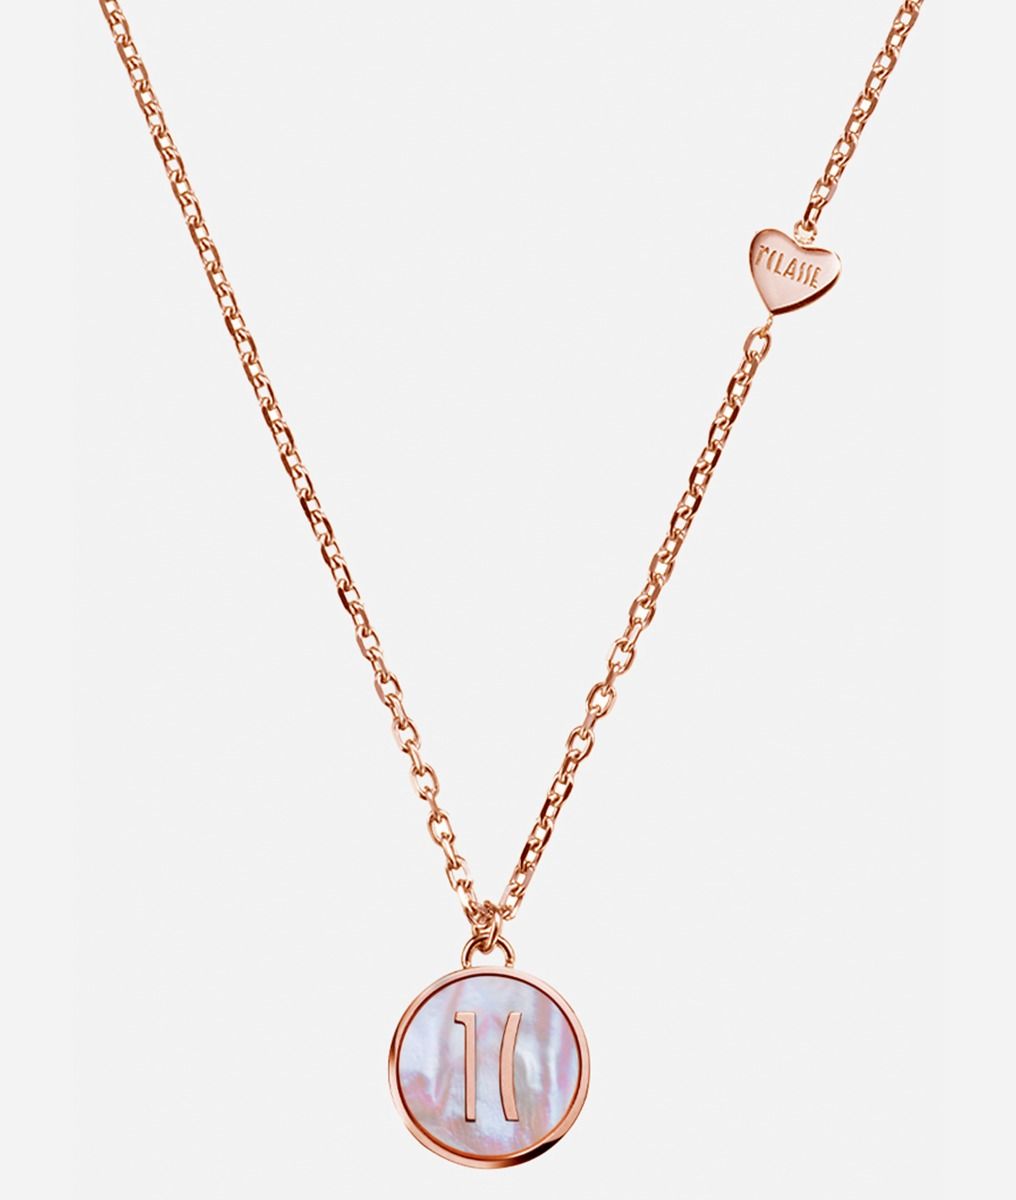 Via Condotti necklace with nacre pendant Rose Gold,front